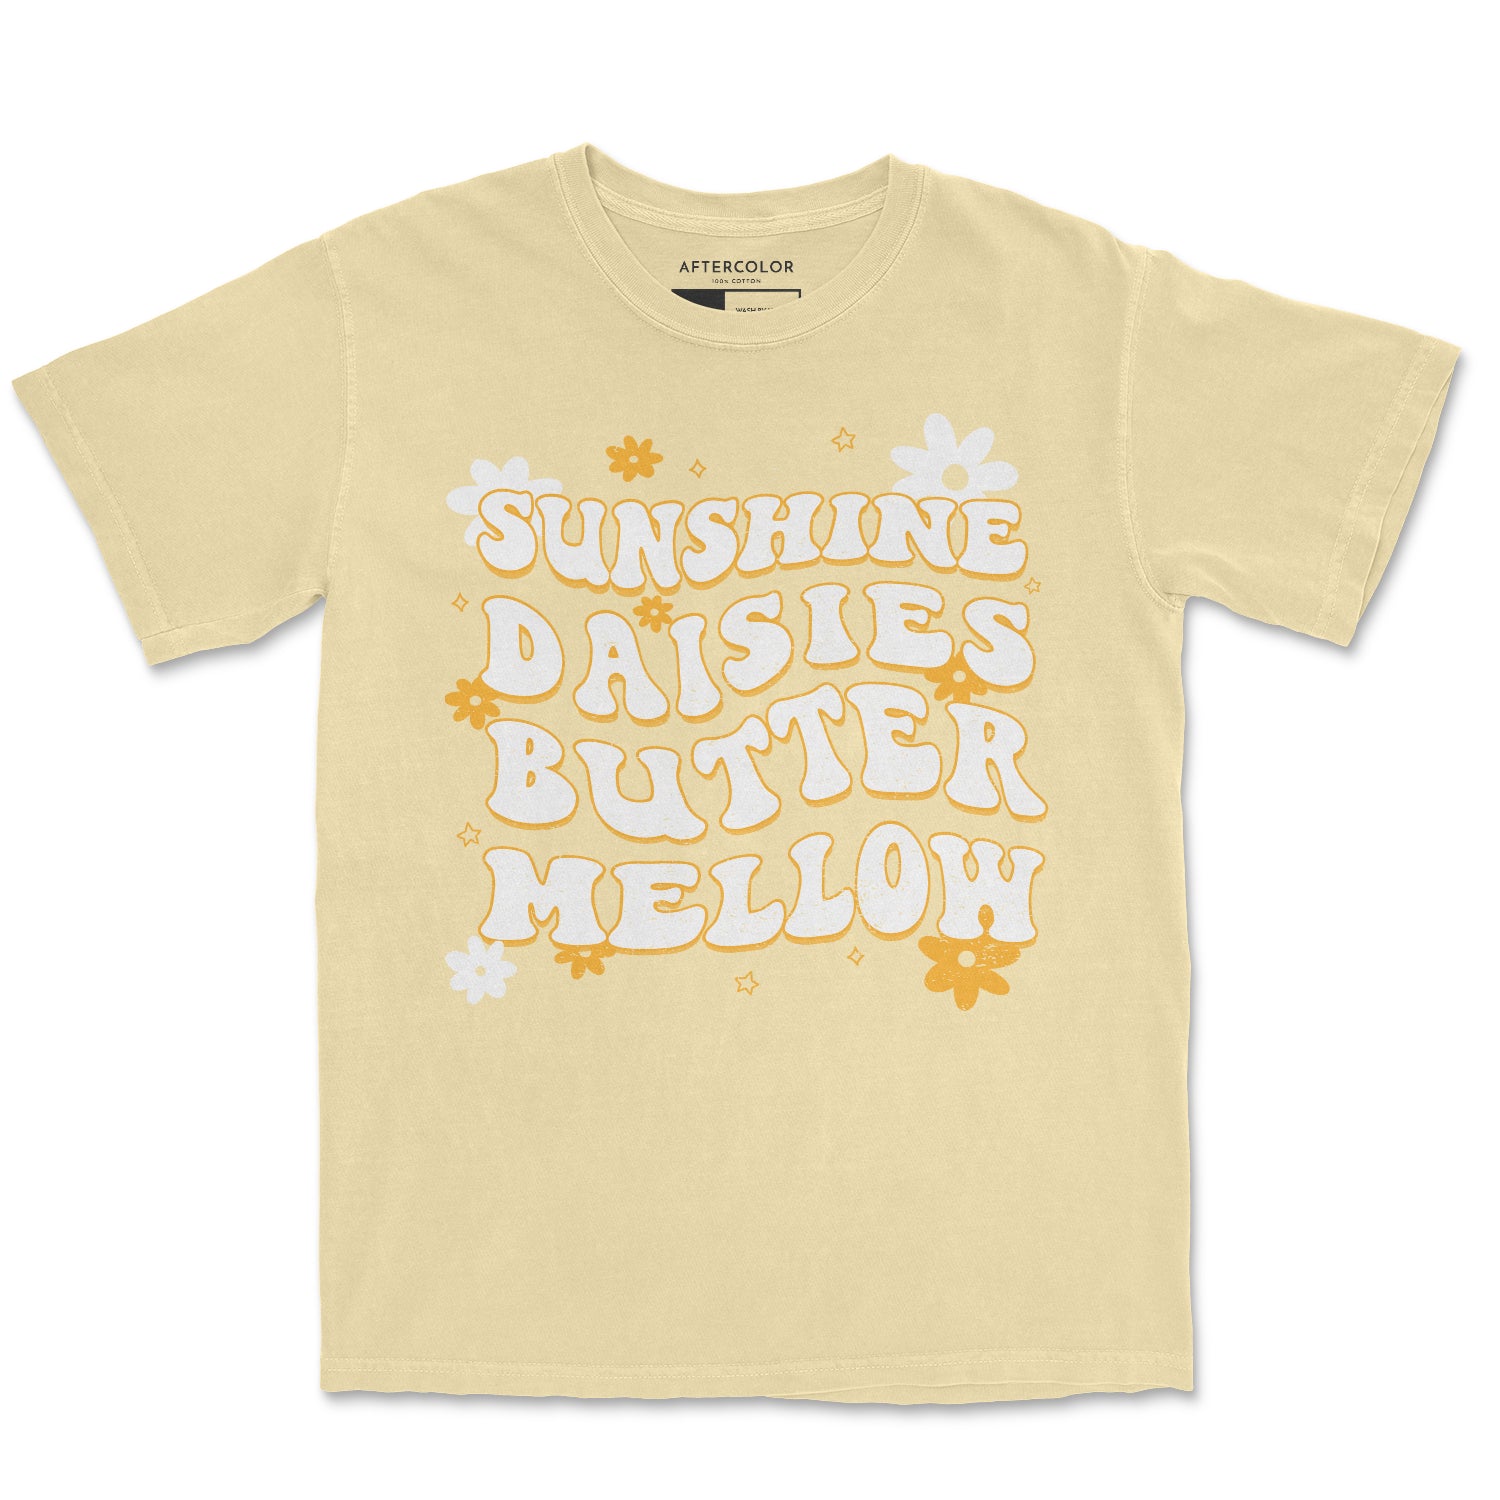 Sunshine Daisies Butter Mellow Graphic Tee